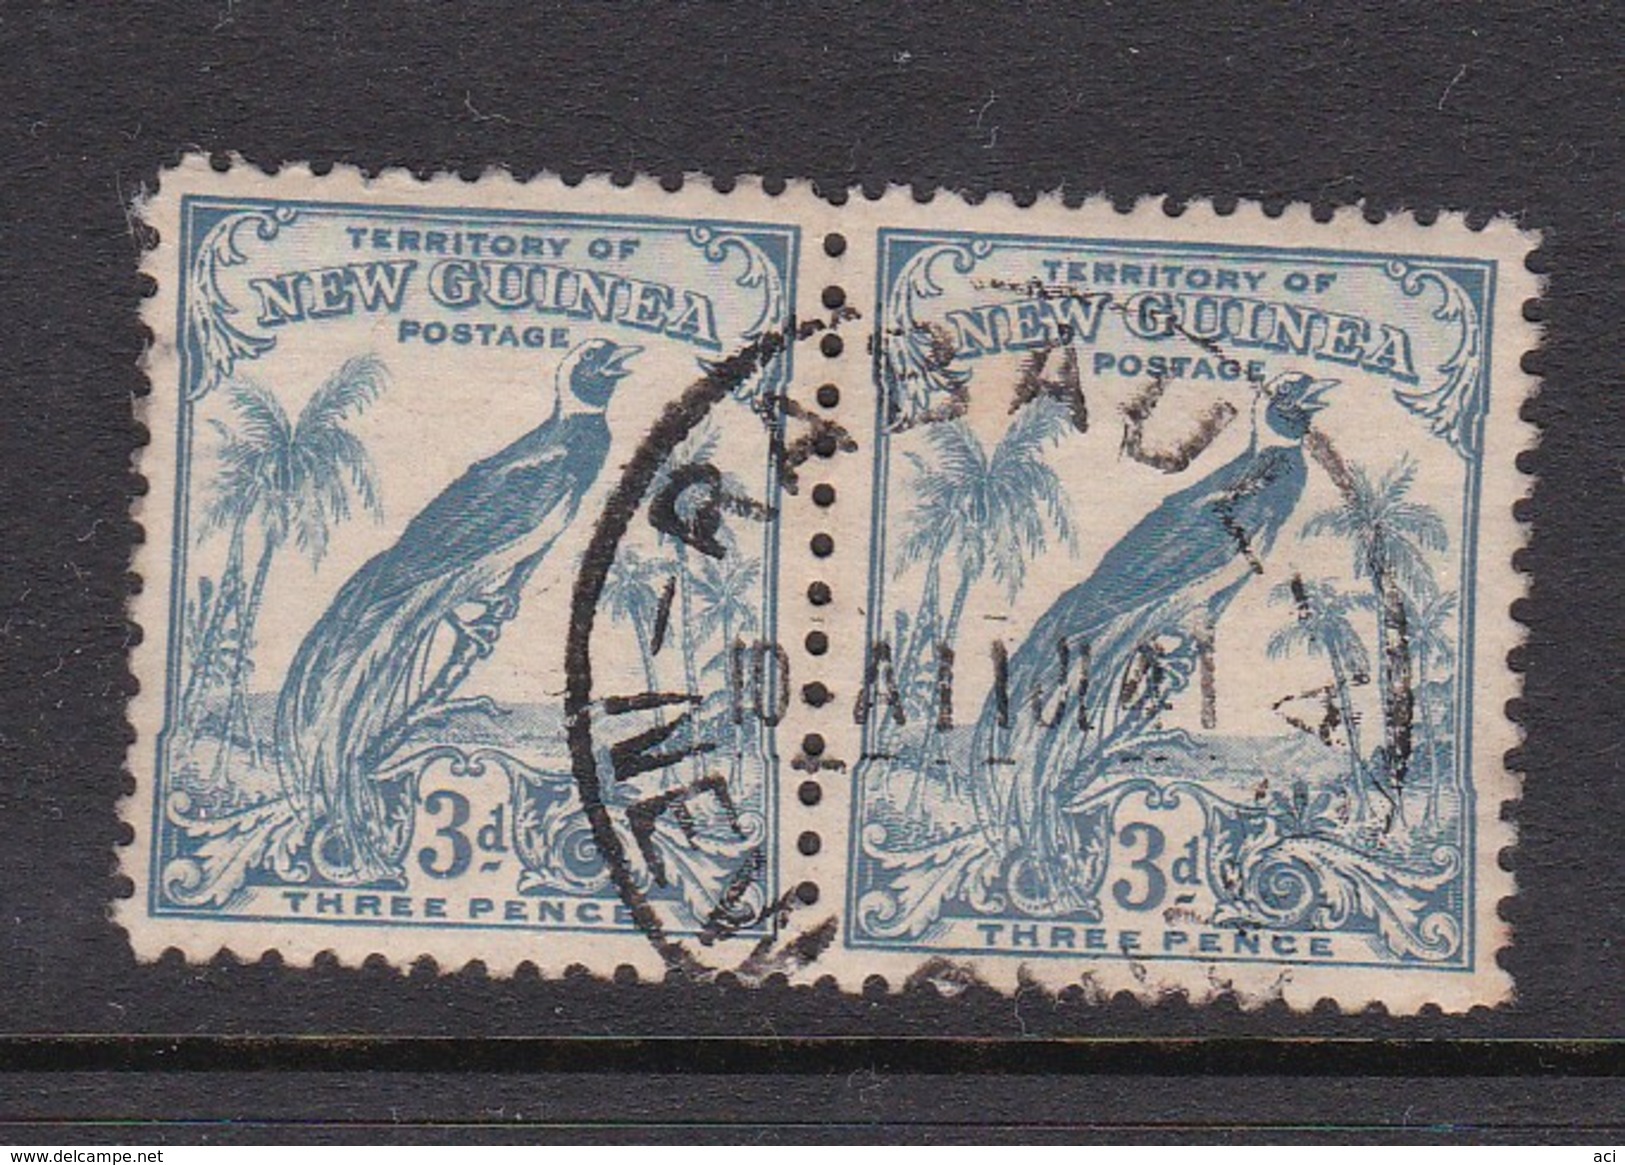 New Guinea SG 180 1931 Raggiana Bird No Date 3d Blue Used Pair - Papua New Guinea